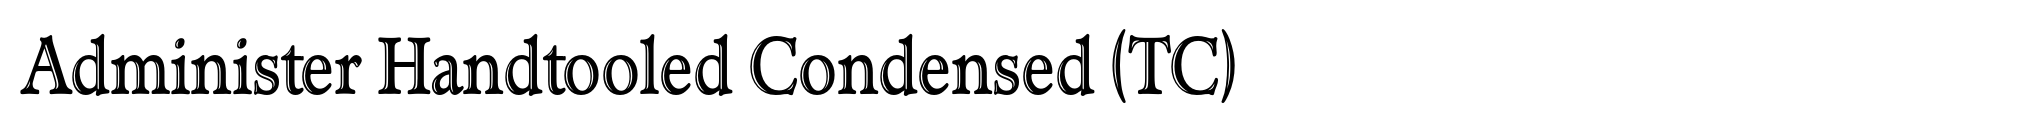 Administer Handtooled Condensed (TC) image